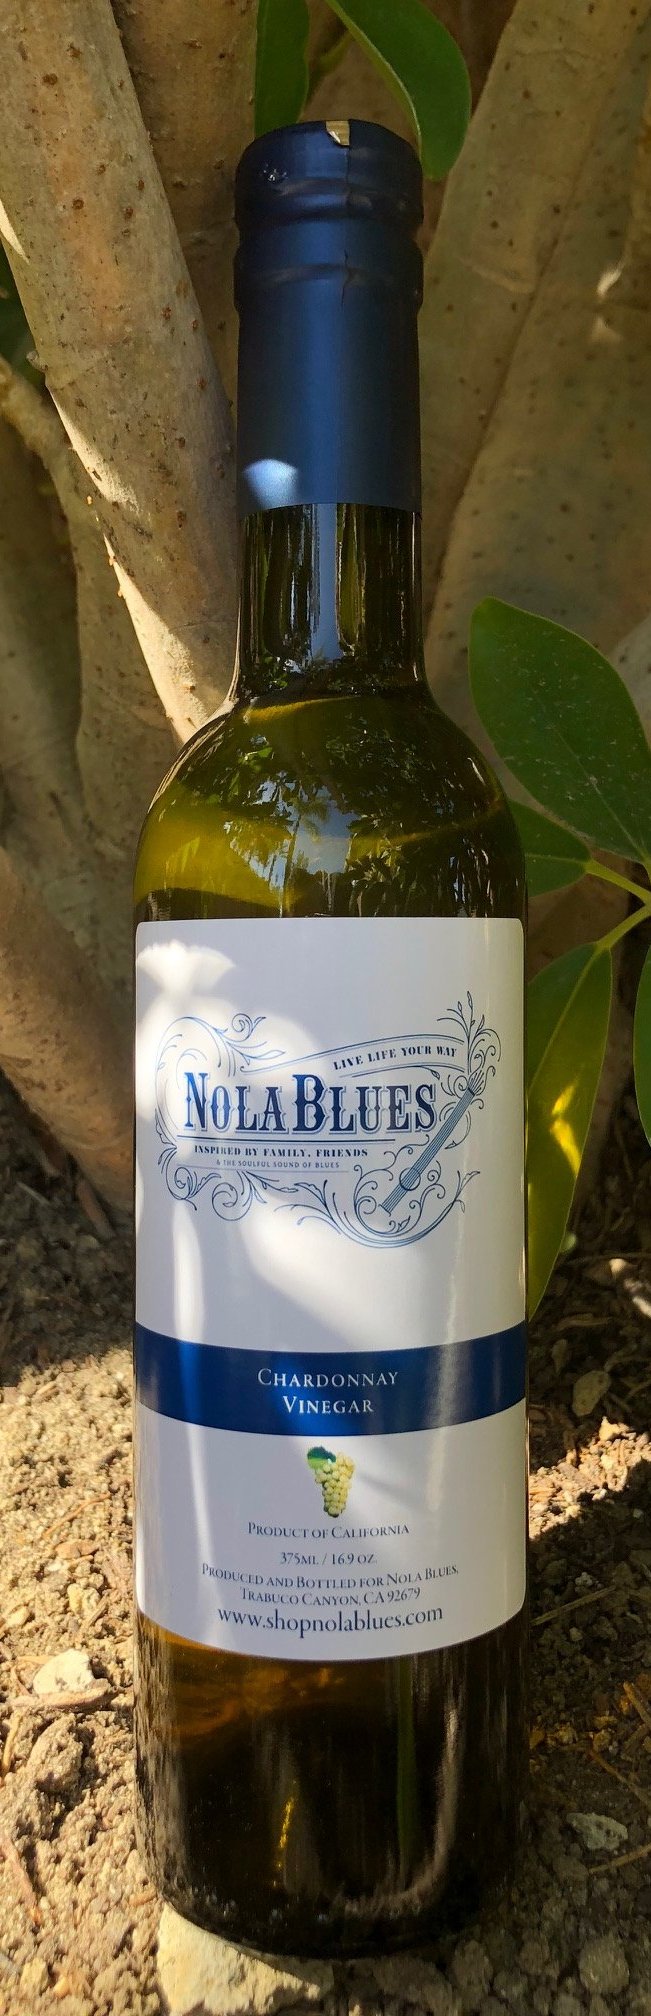 Chardonnay Vinegar, 375ml - Nola Blues